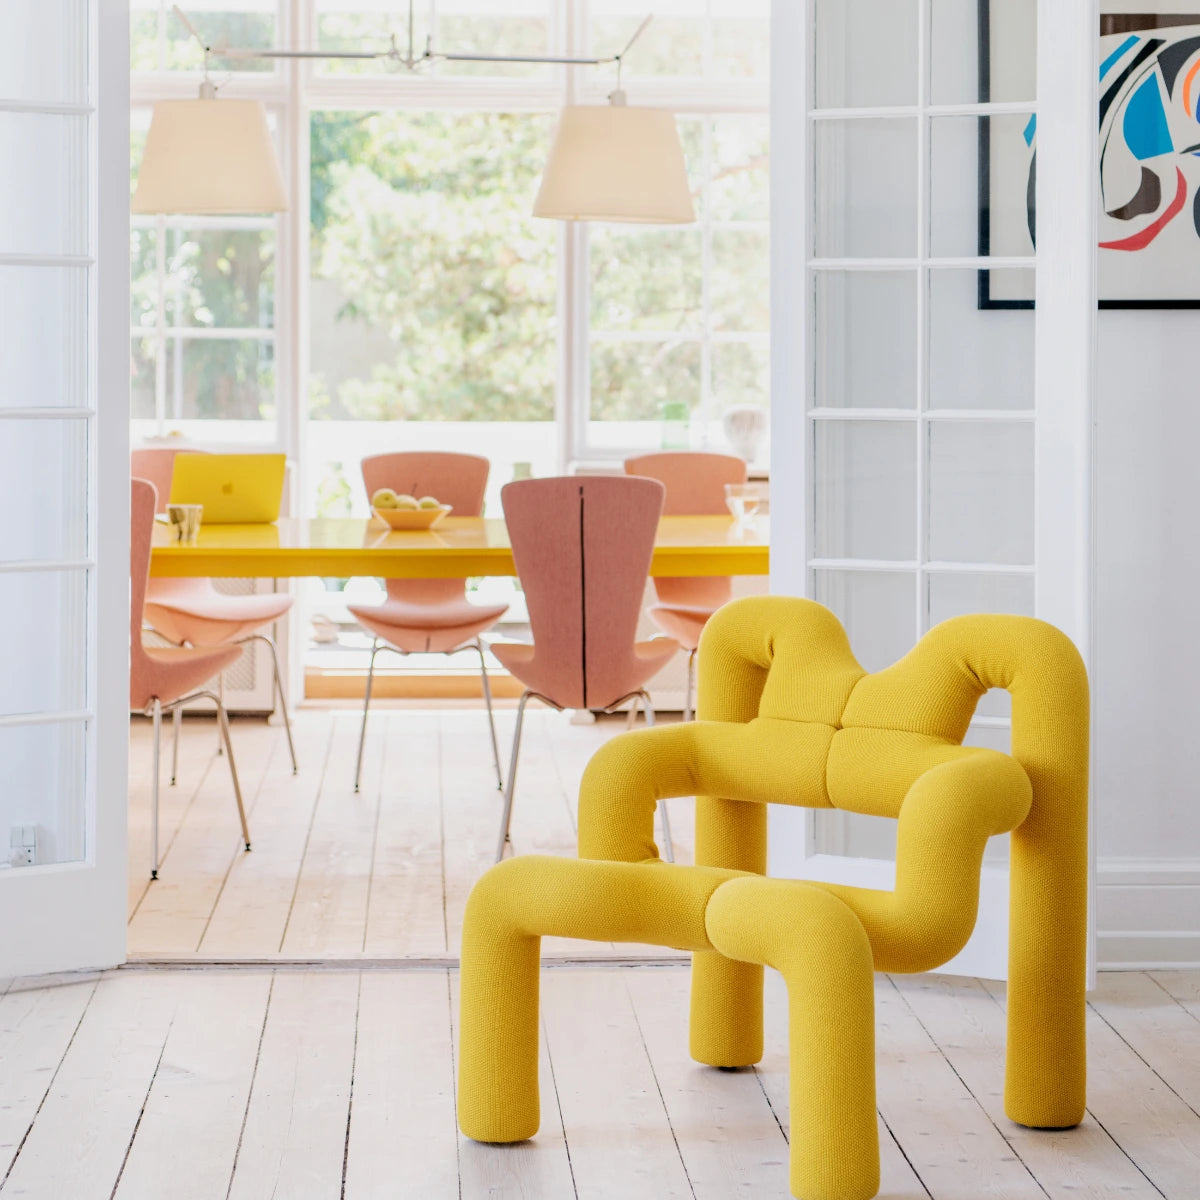 ekstrem chair by varier - yellow - home